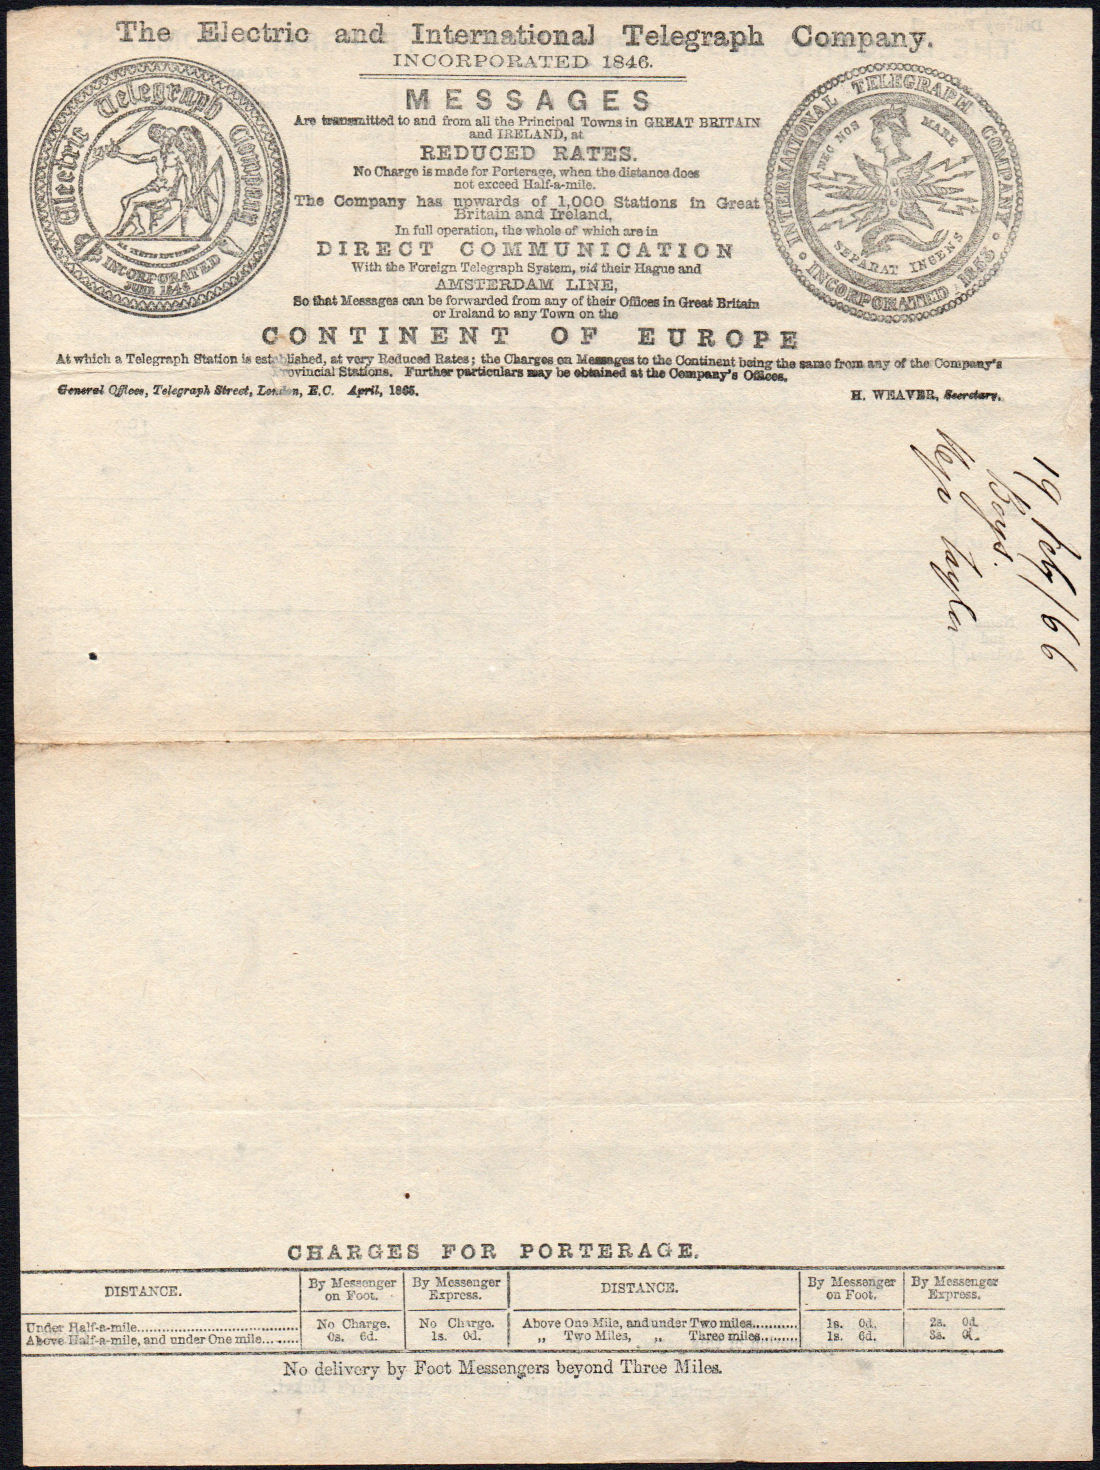 Electric Telegraph Company Form C - back.